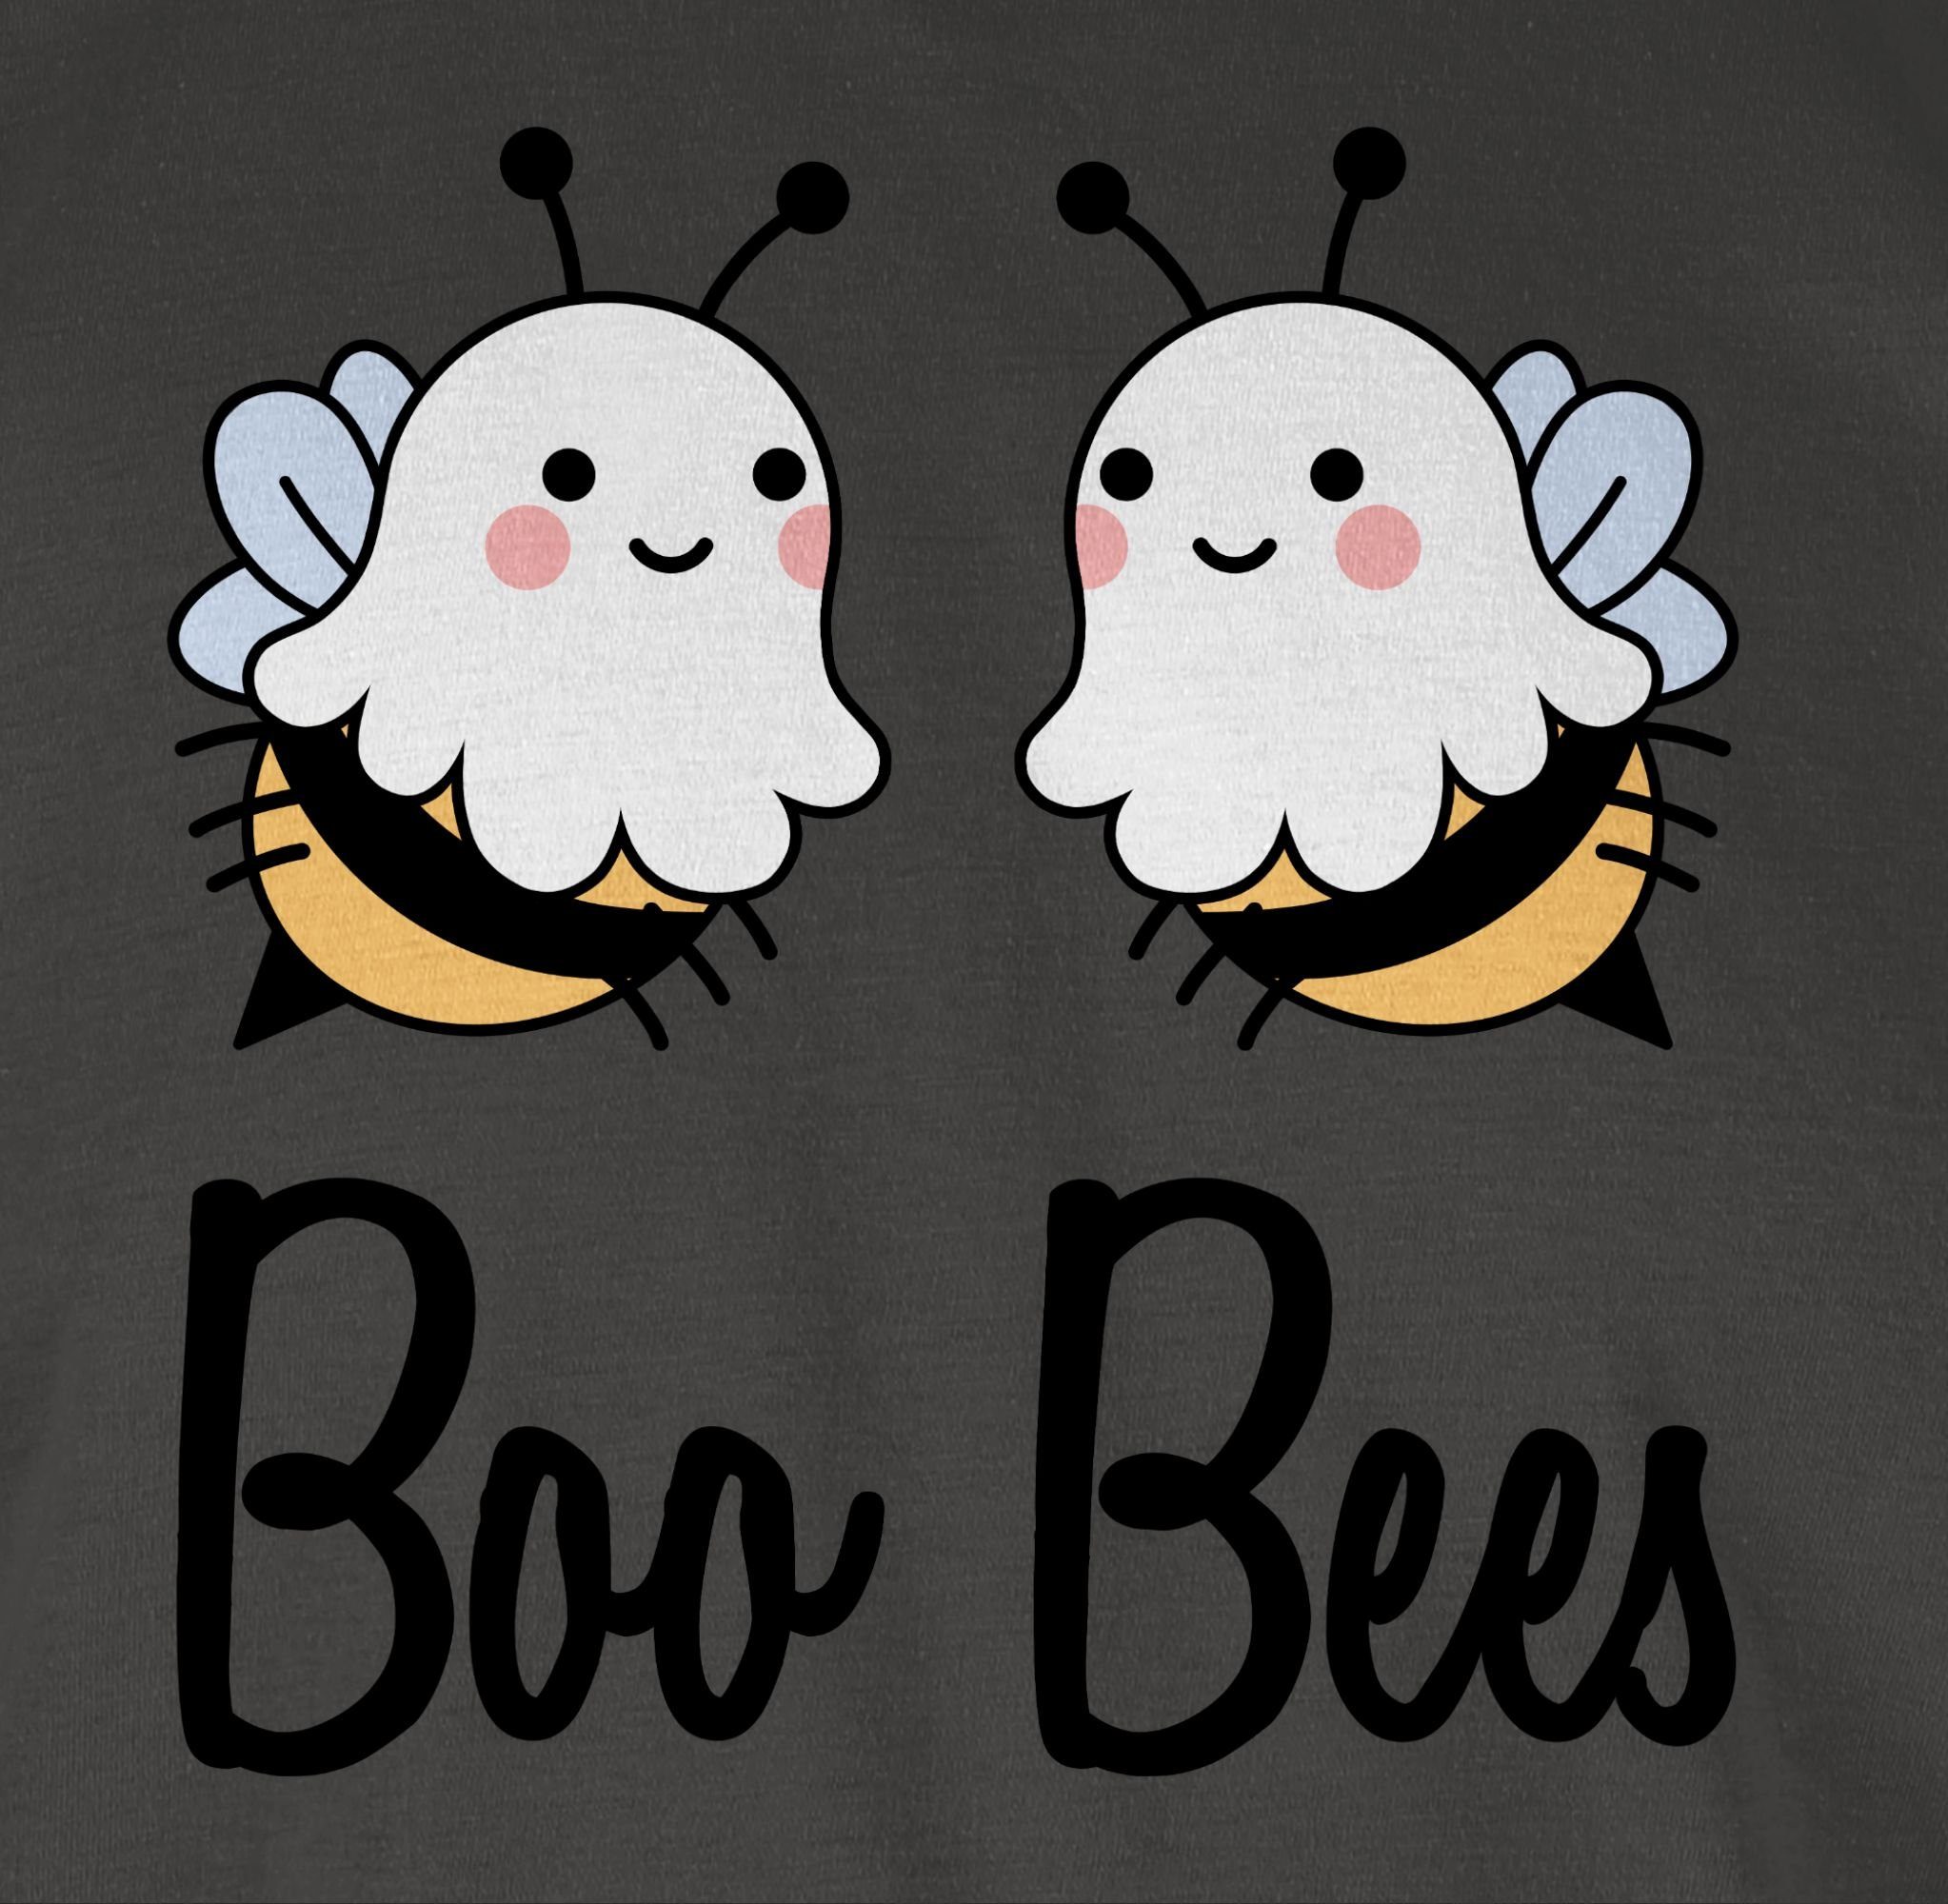 Shirtracer T-Shirt Boo Bees Boobees Halloween Dunkelgrau Herren Kostüme 2 Boobs Bienen